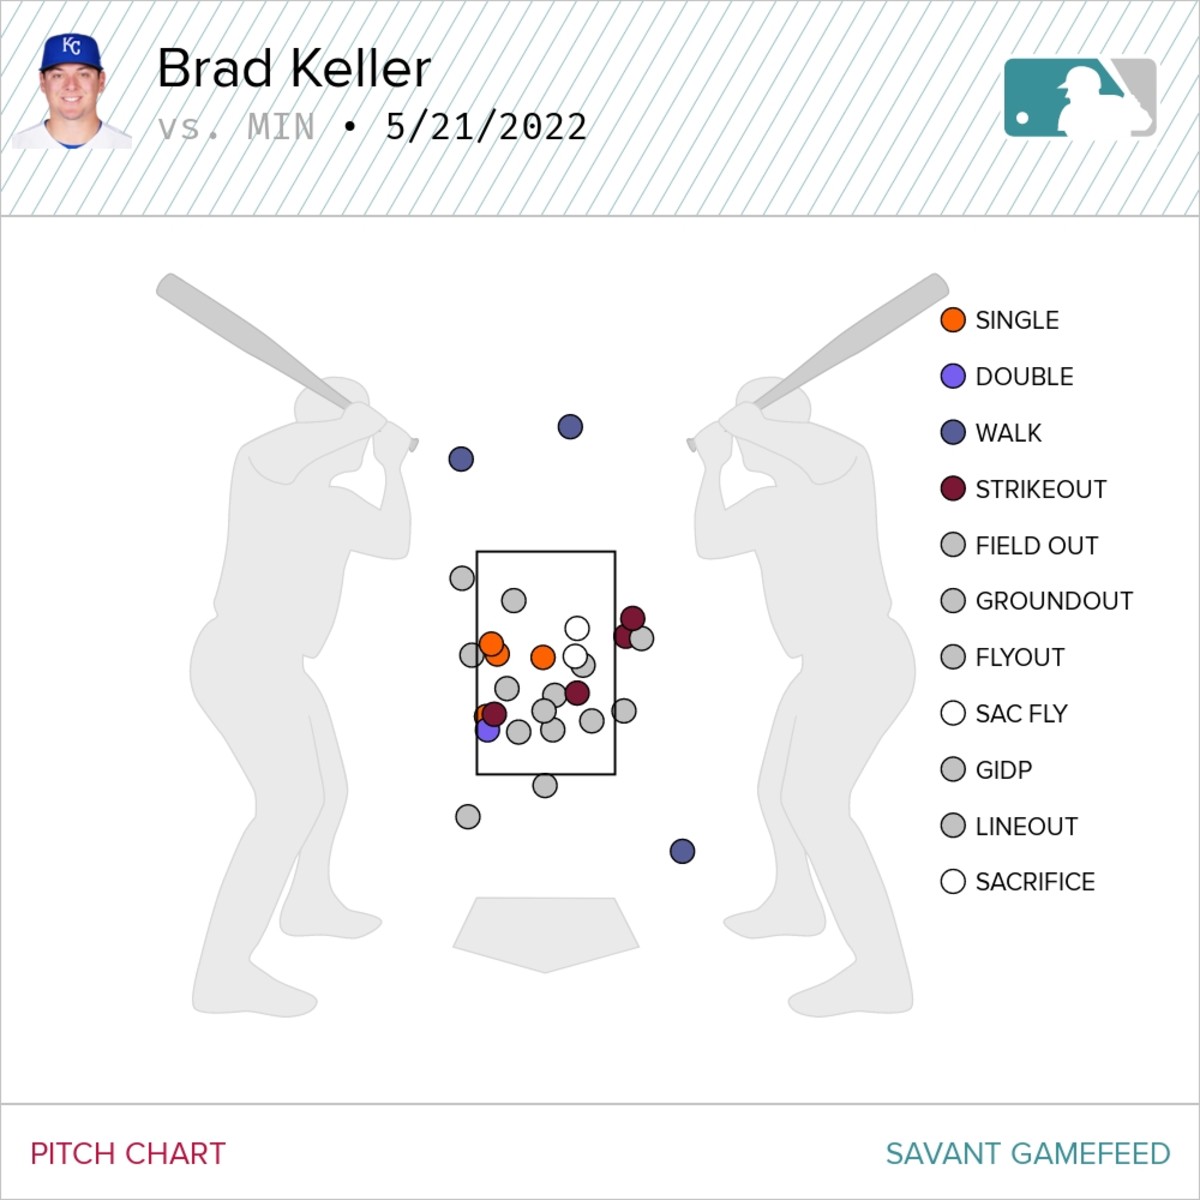 Brad Keller pitch chart, courtesy of Baseball Savant.